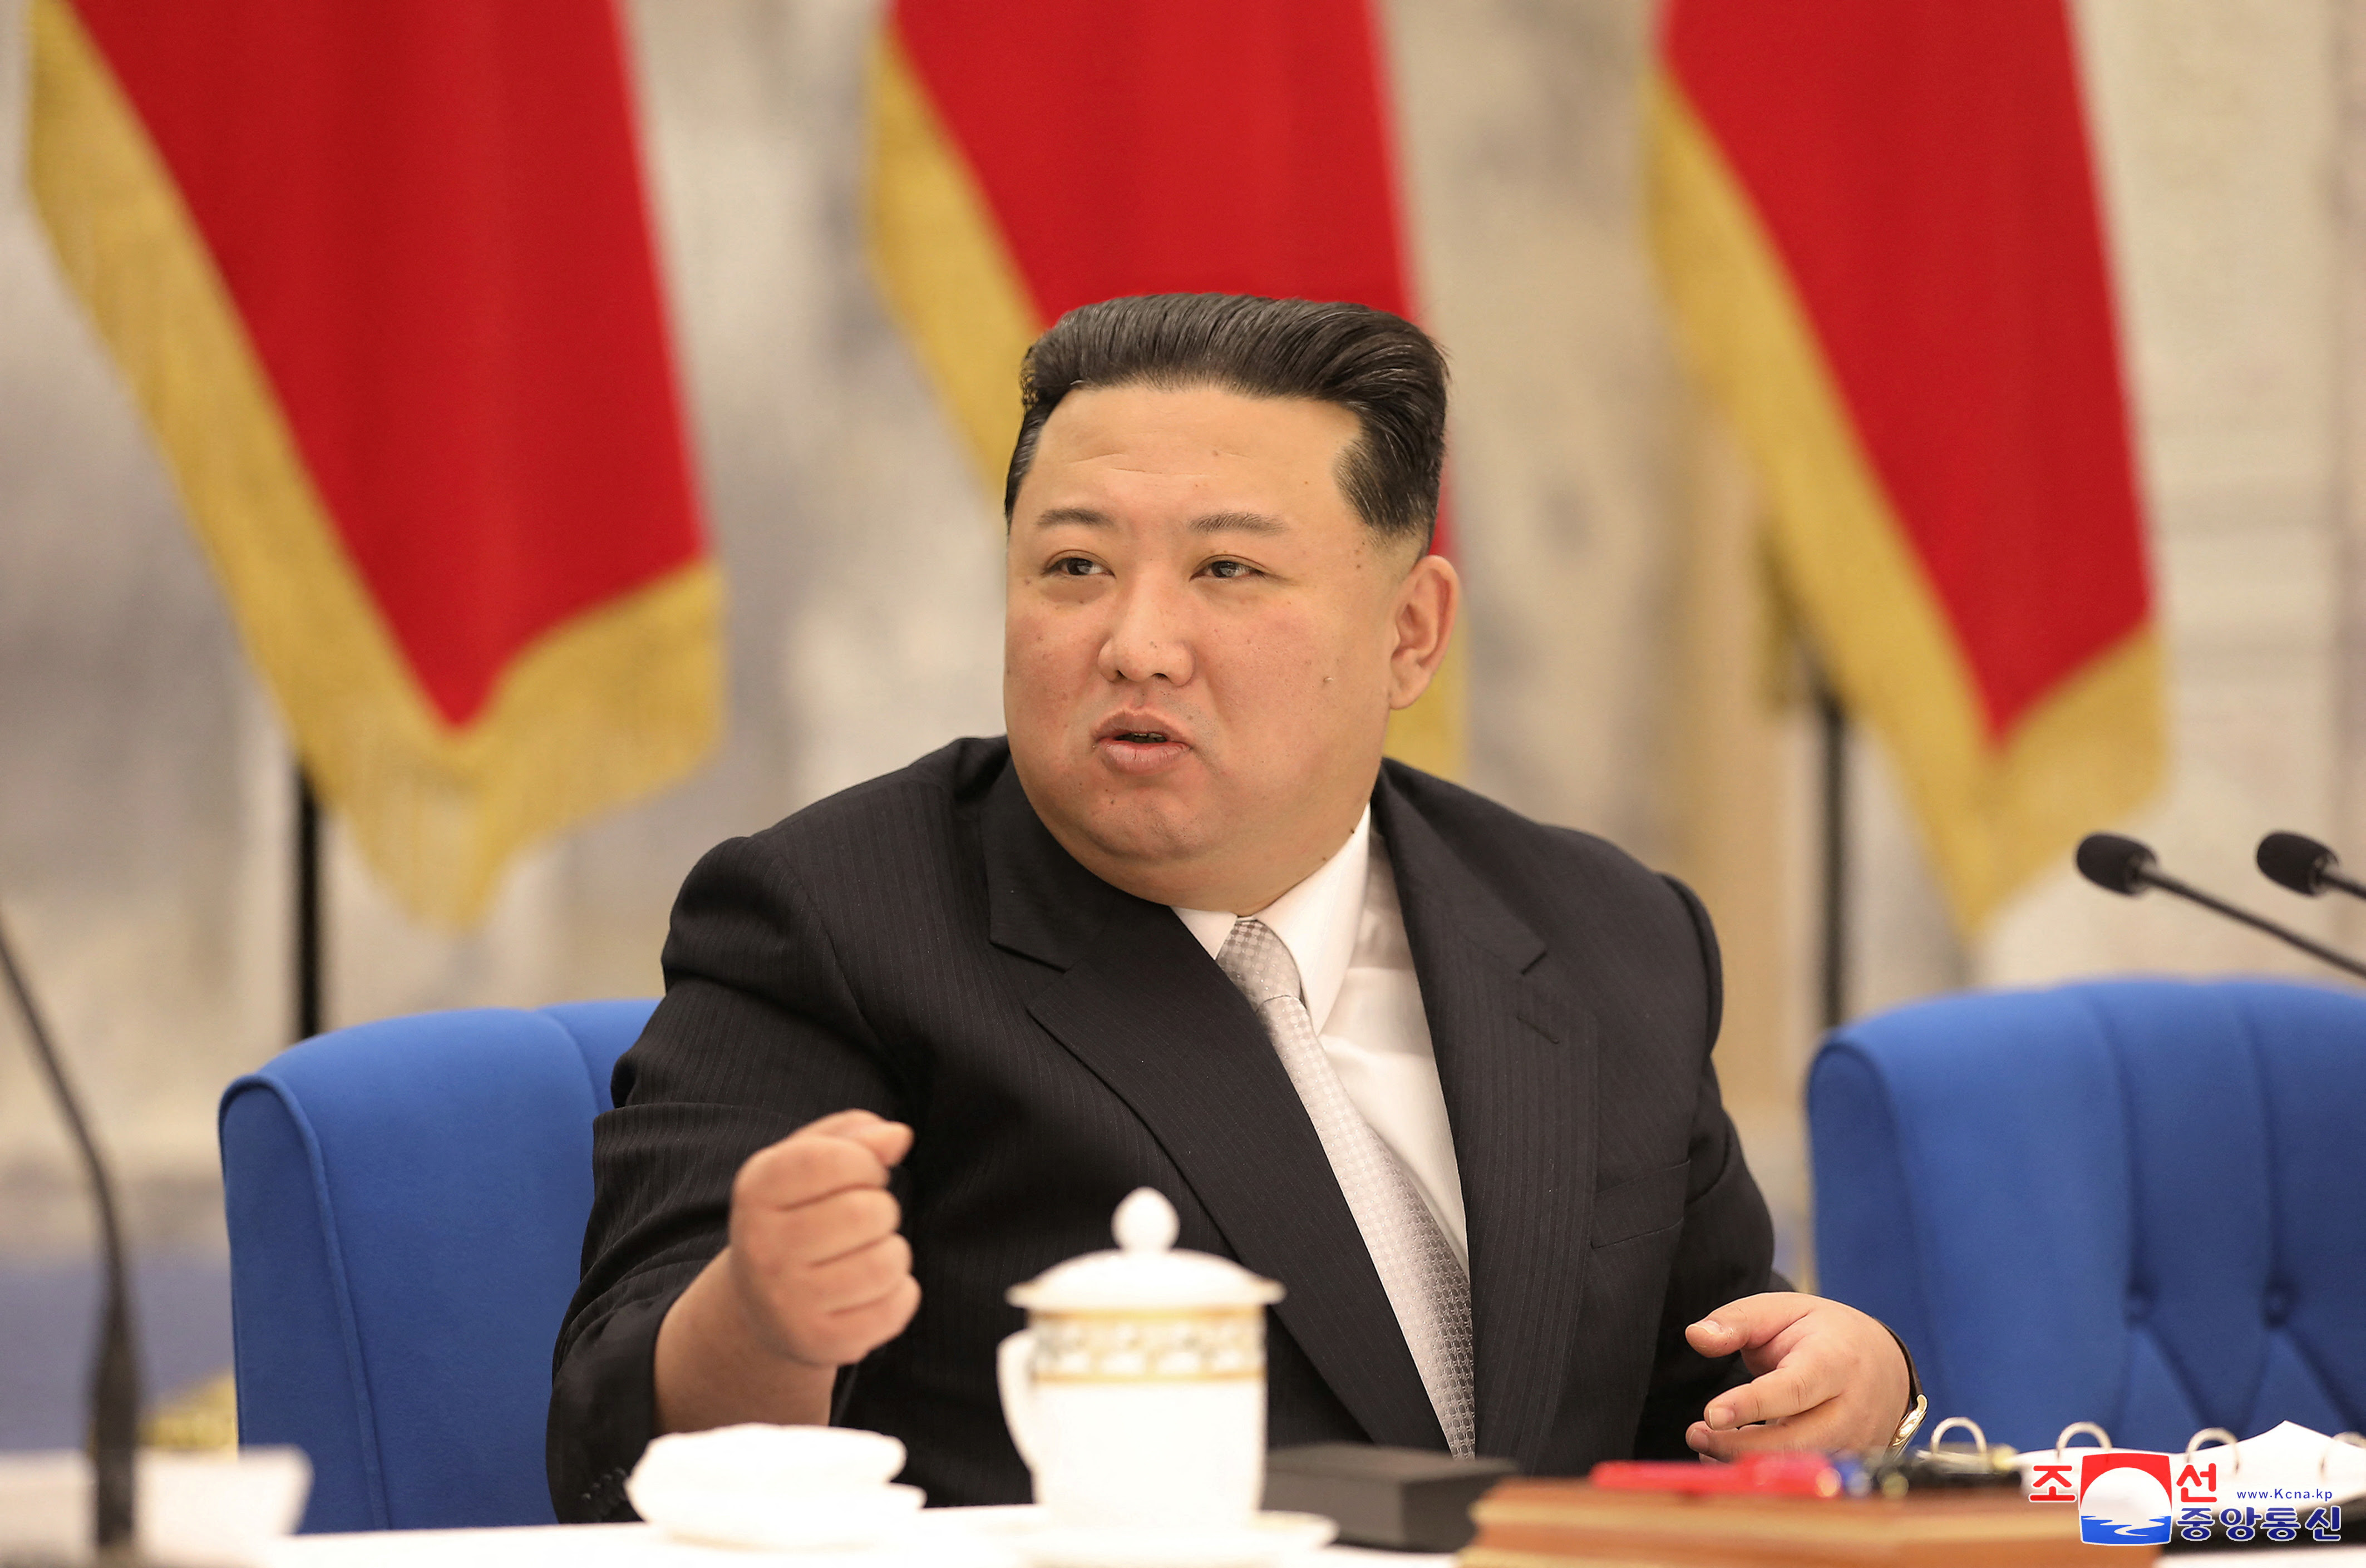 N. Korea talks of new army duties suggest nuclear deployment